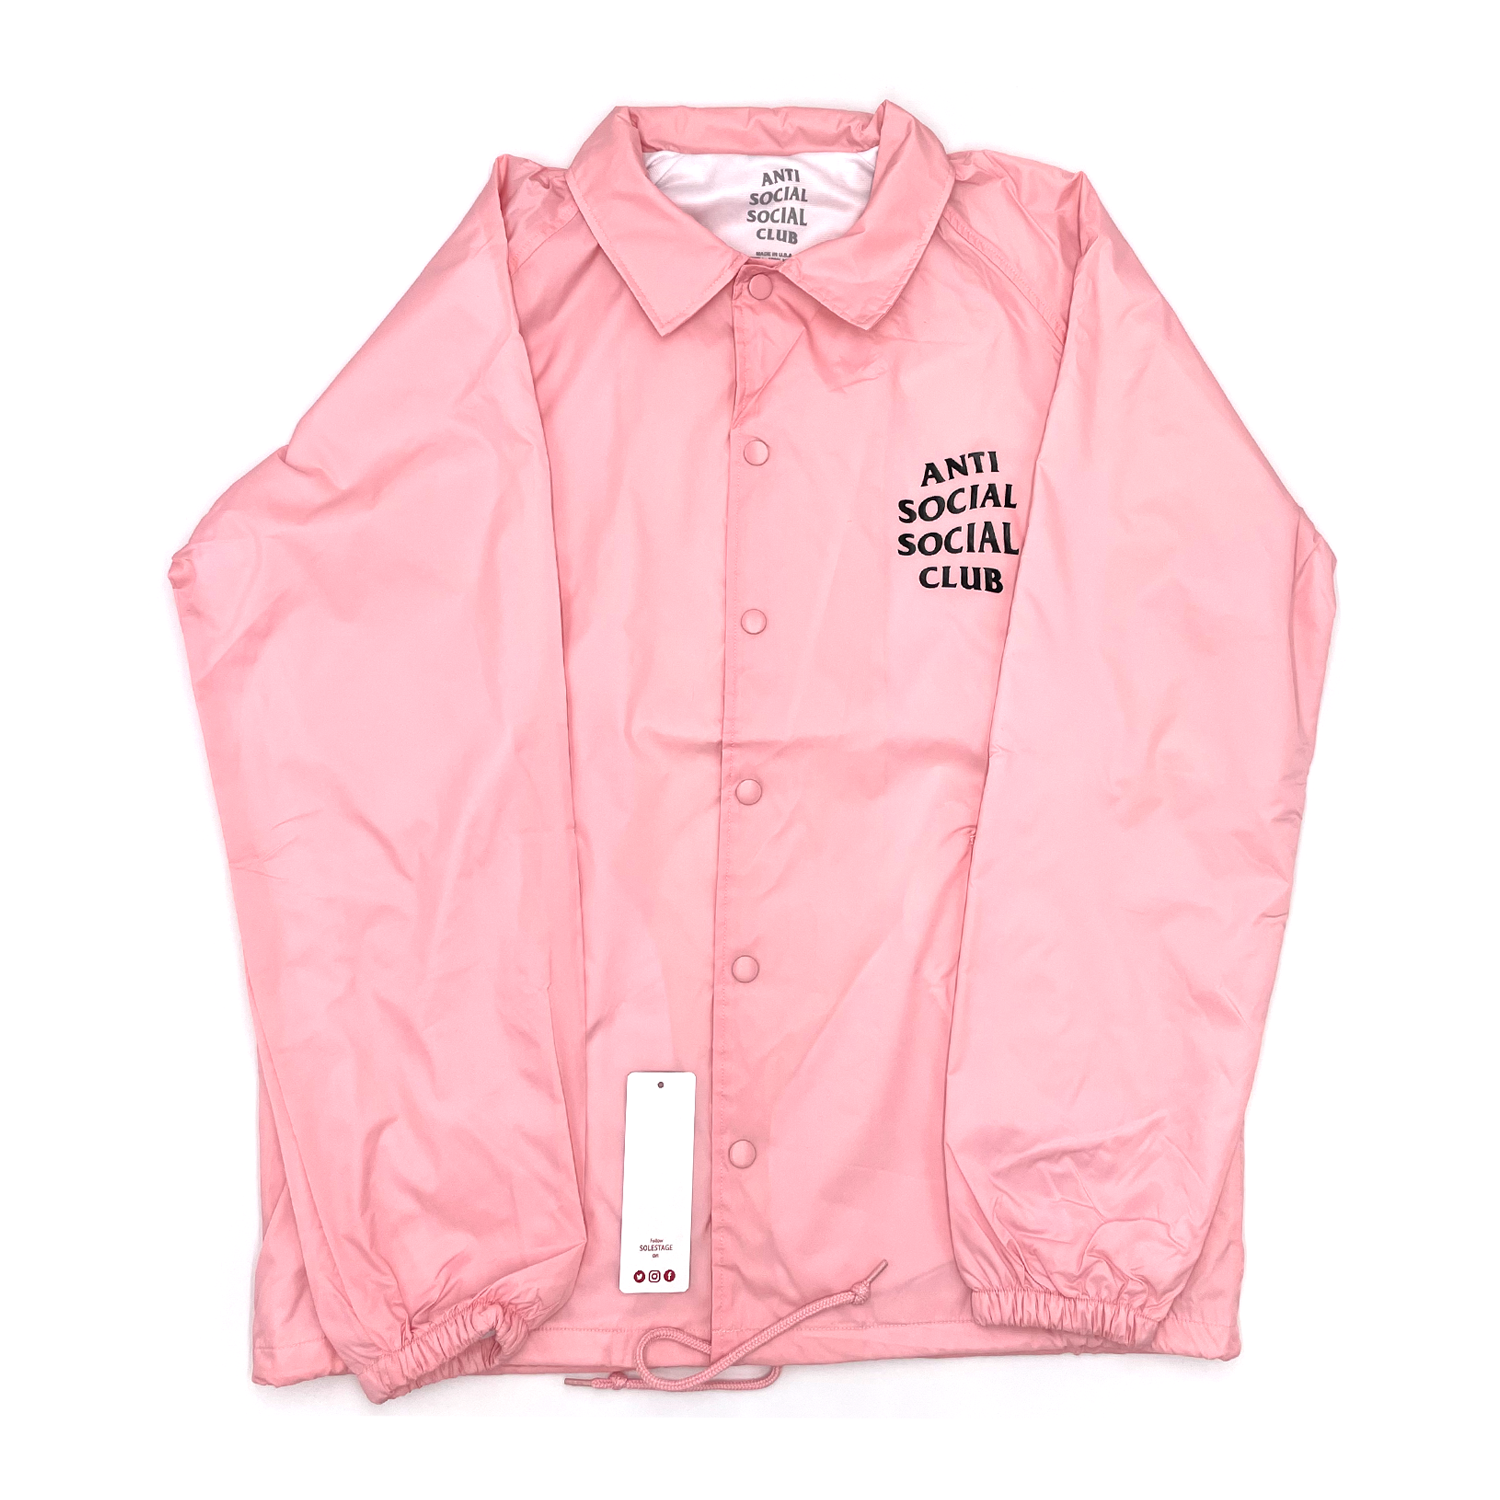 Antisocial Social Club Coach Jacket Pink White (ASSW335) Men's Size M-L